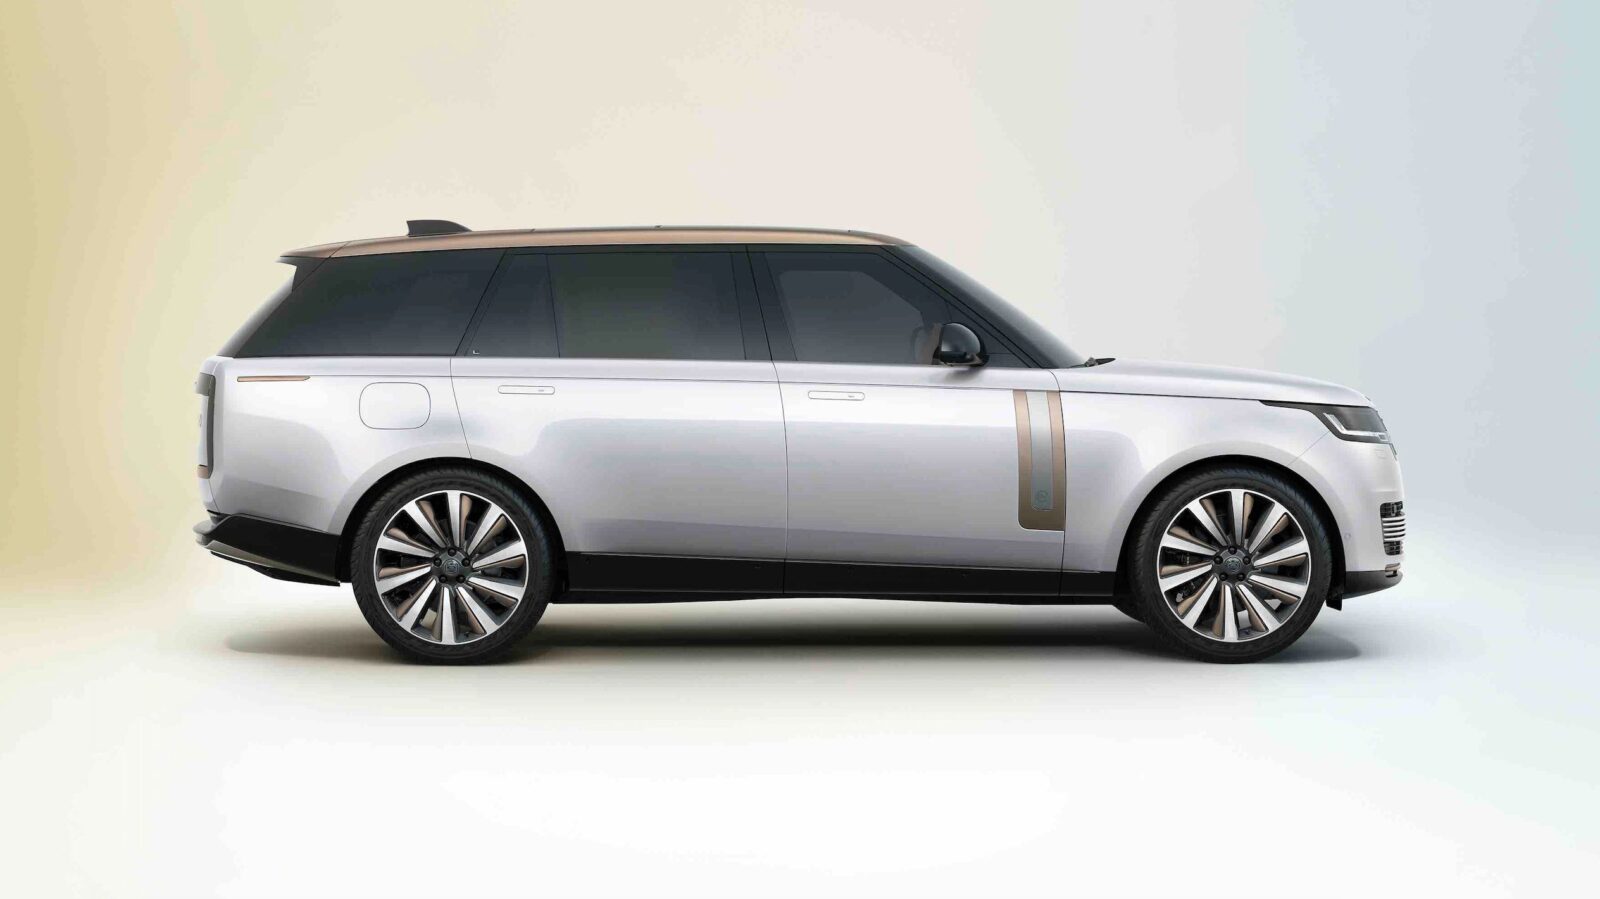 New Range Rover silhouette in silver